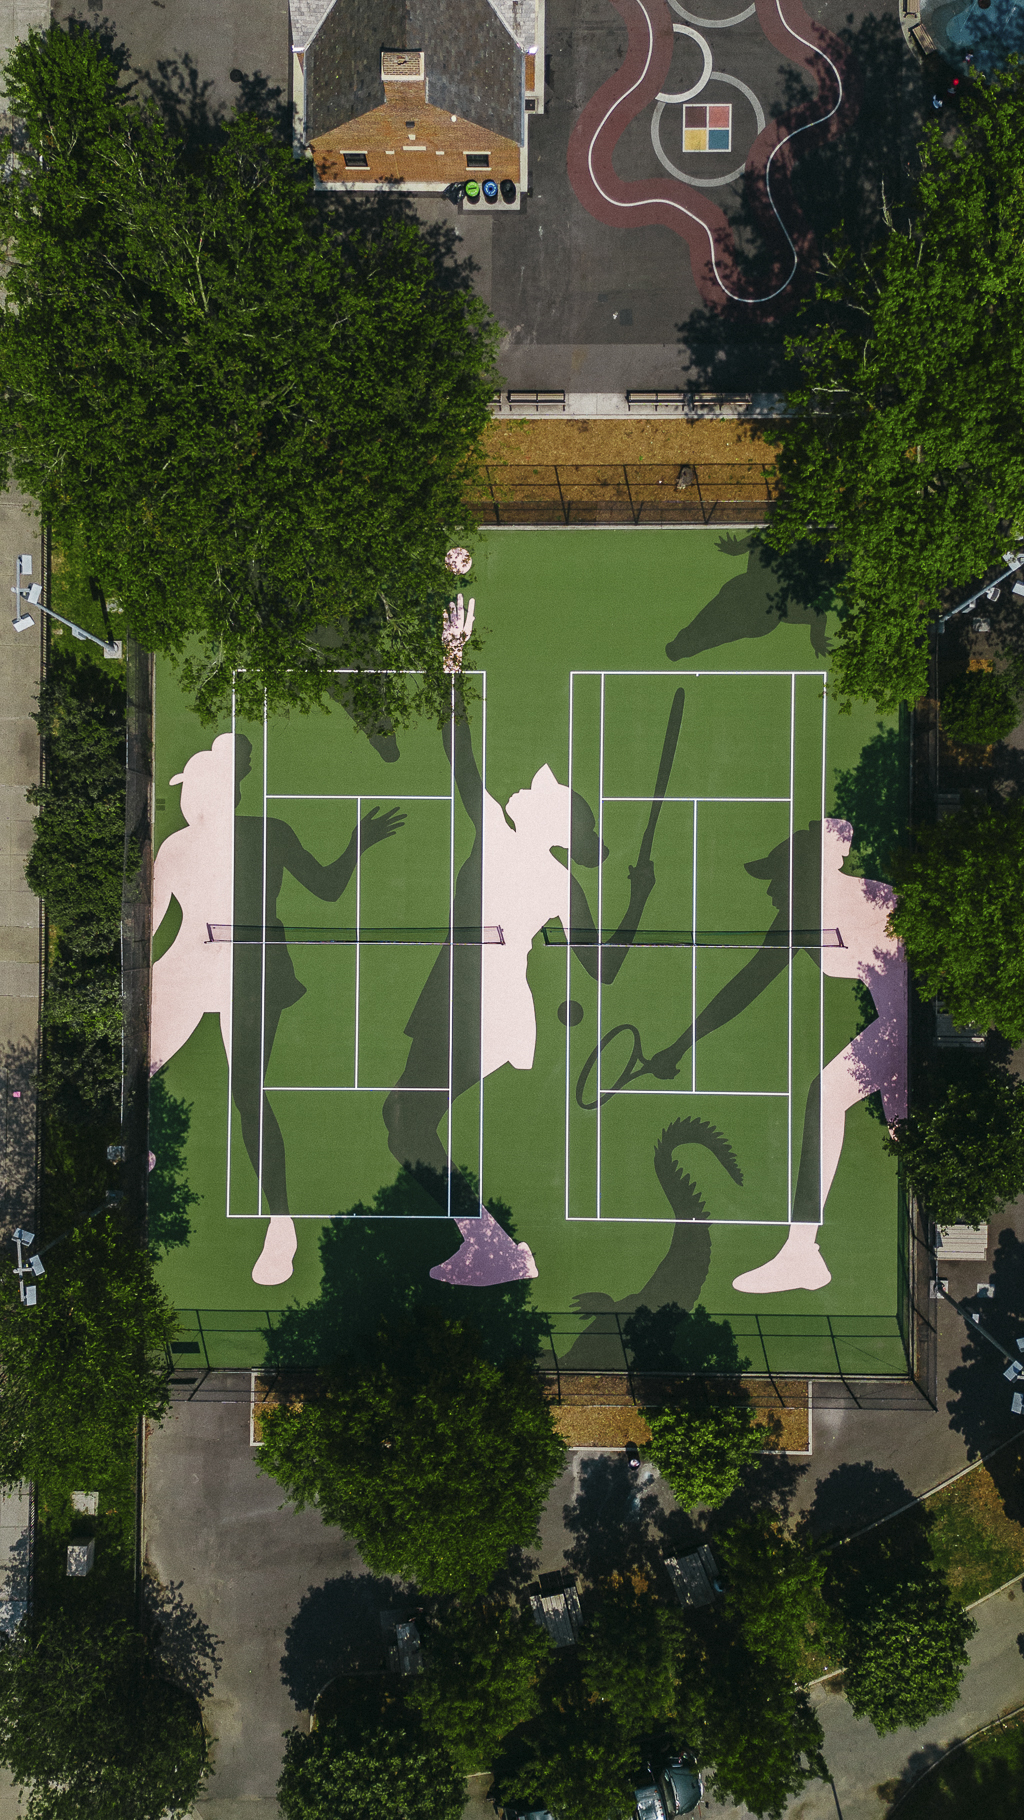 terrain de tennis Lacoste New York City bronx venus williams